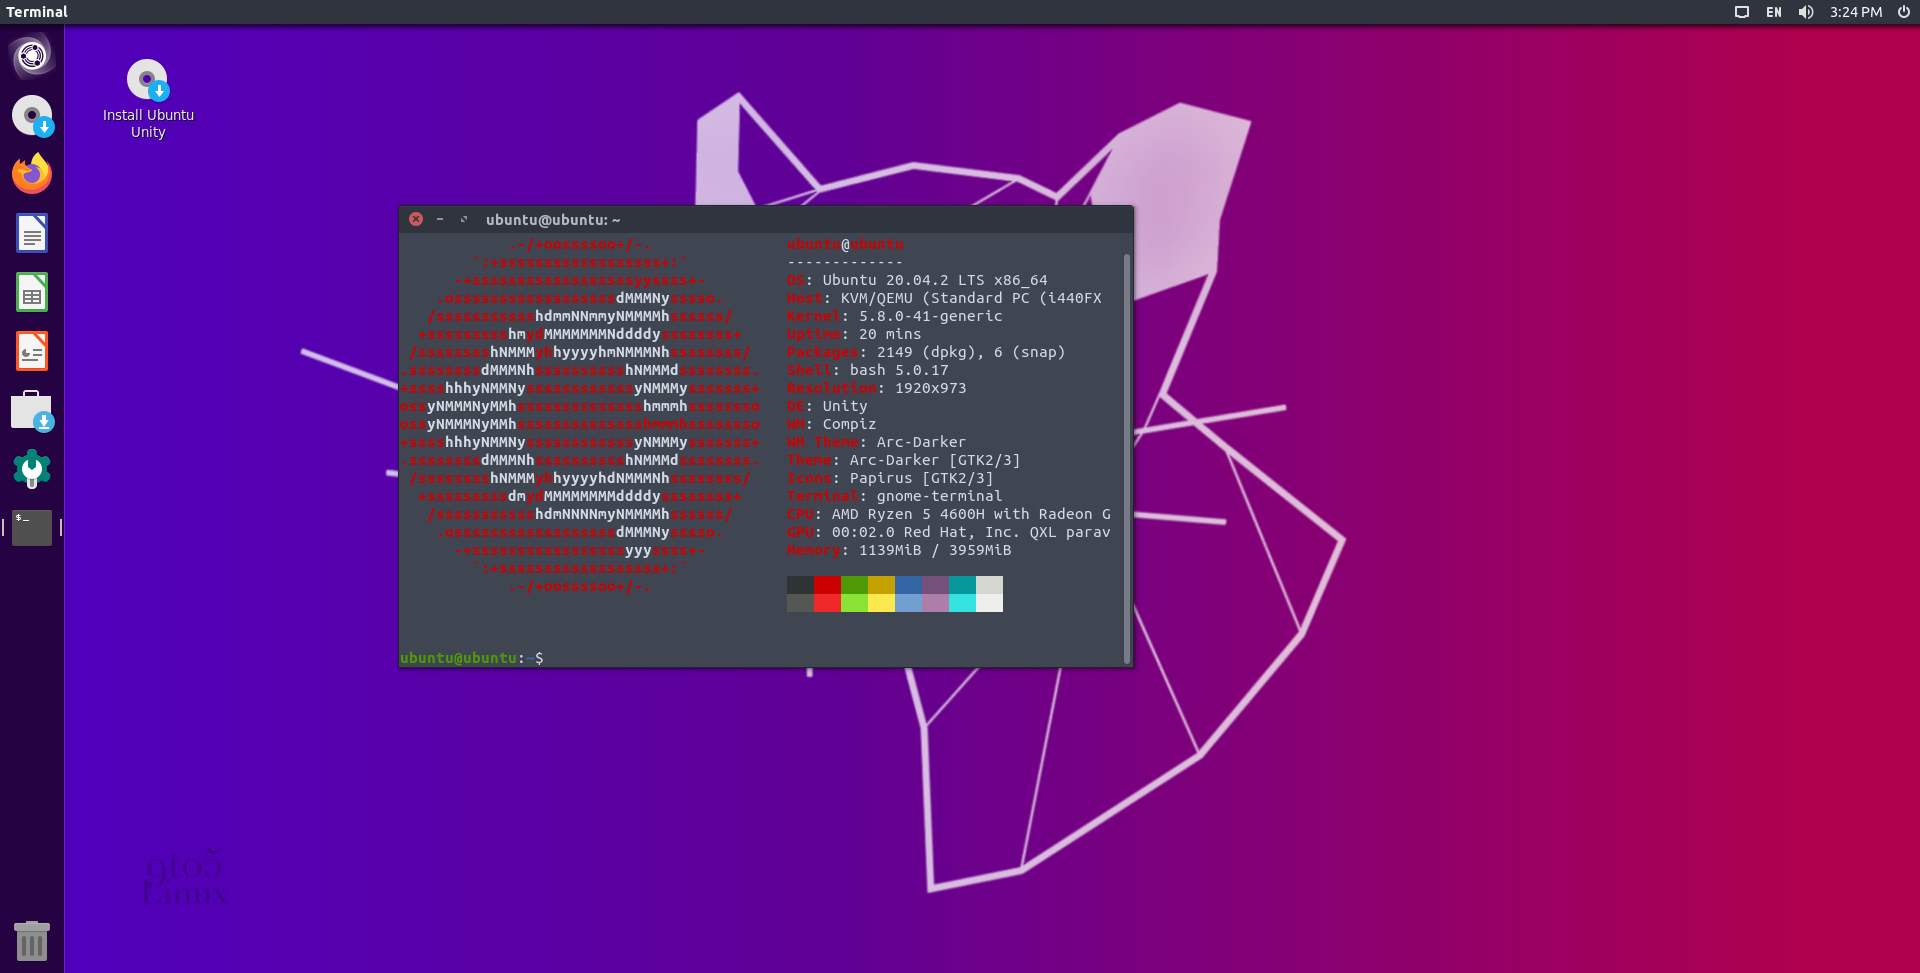 Ubuntu Unity Remix 20.04.2 Released with GRUB2, Artwork Refinements